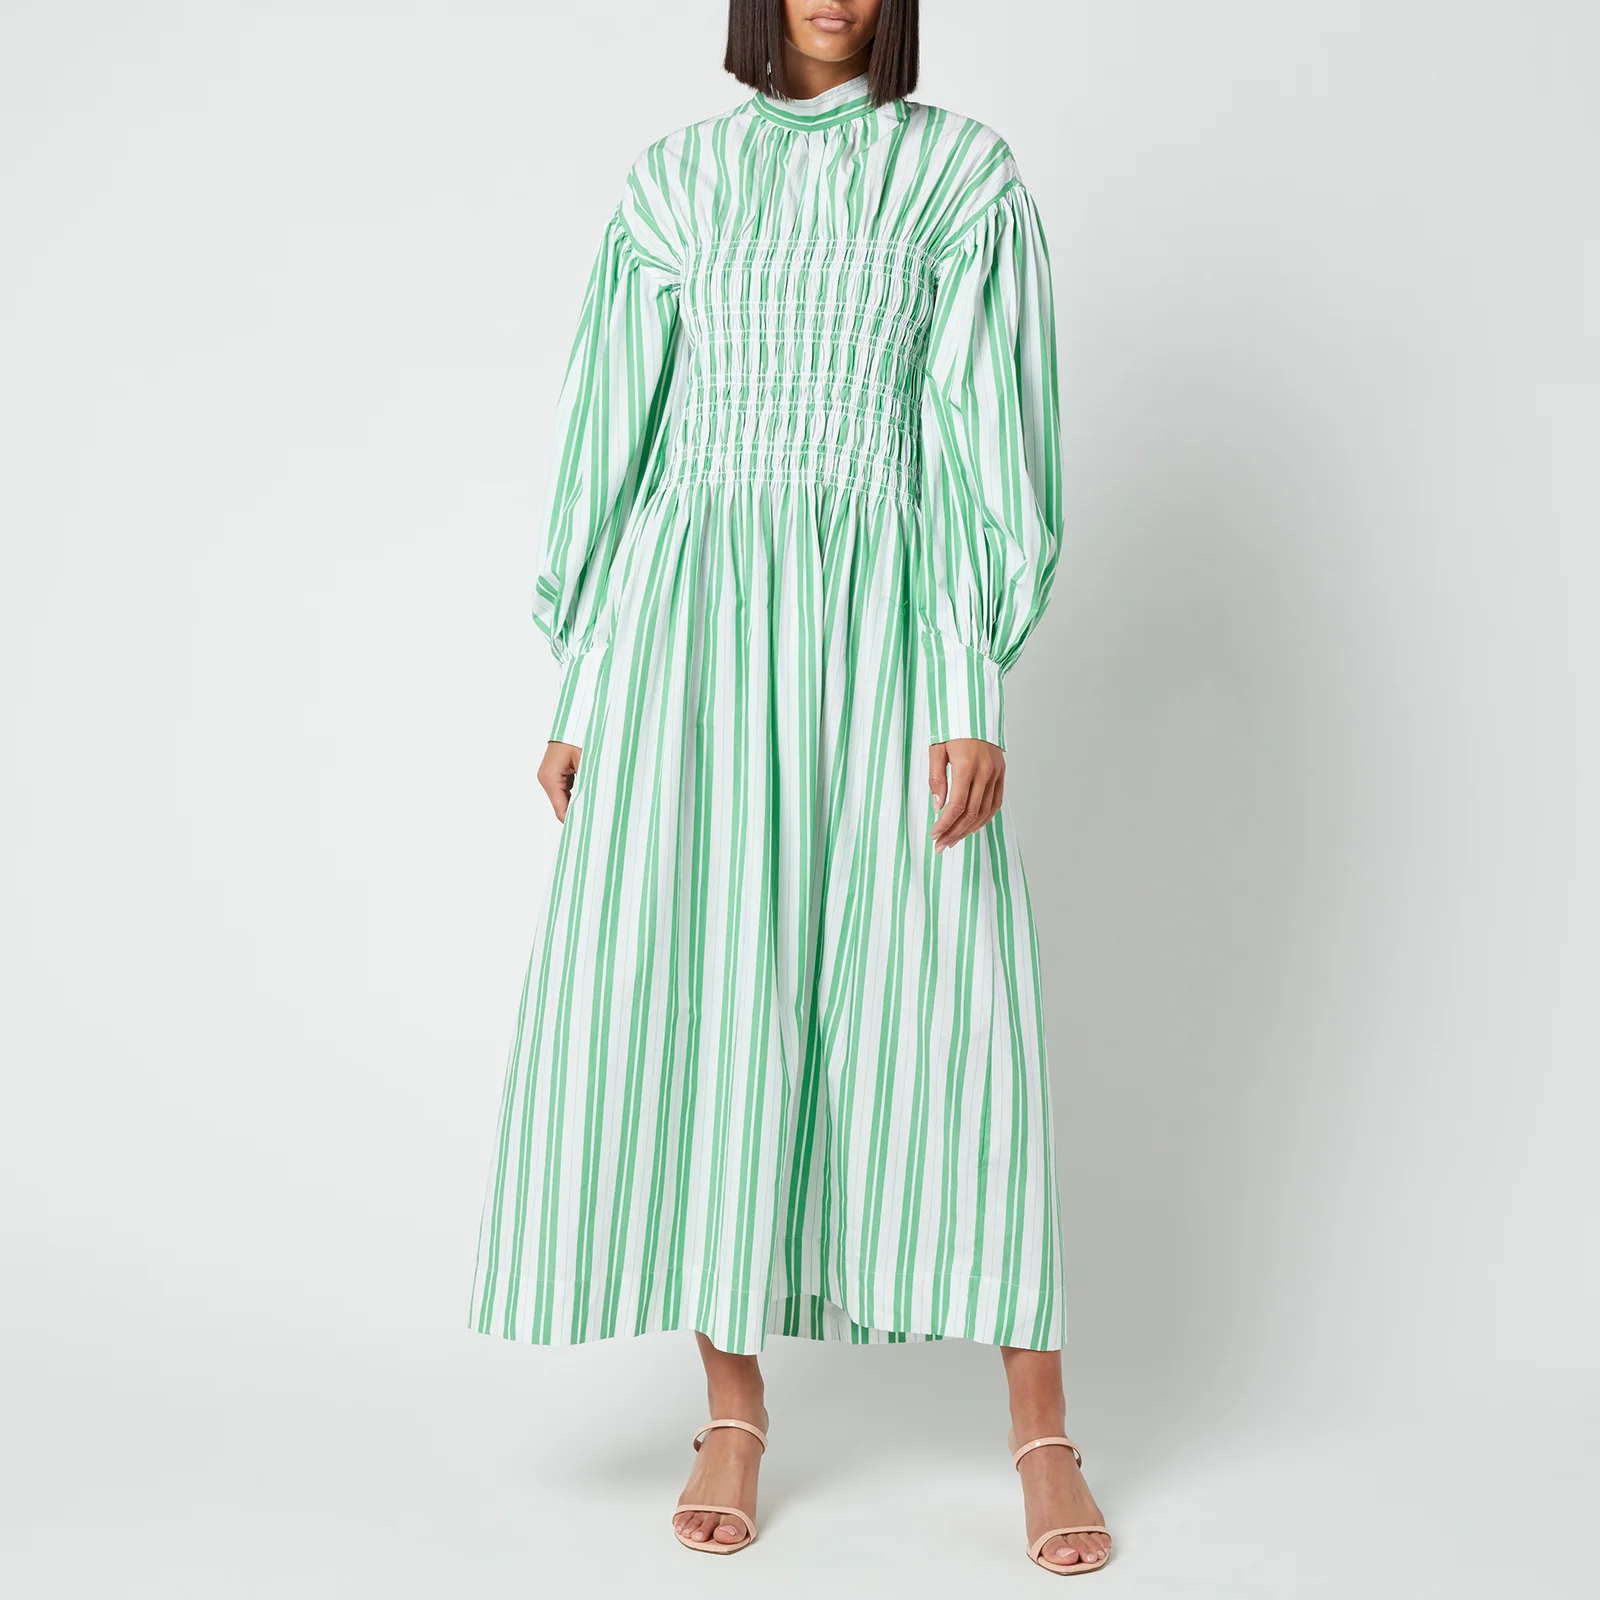 Ganni Women's Smock Stripe Cotton Dress - Kelly Green Image 1